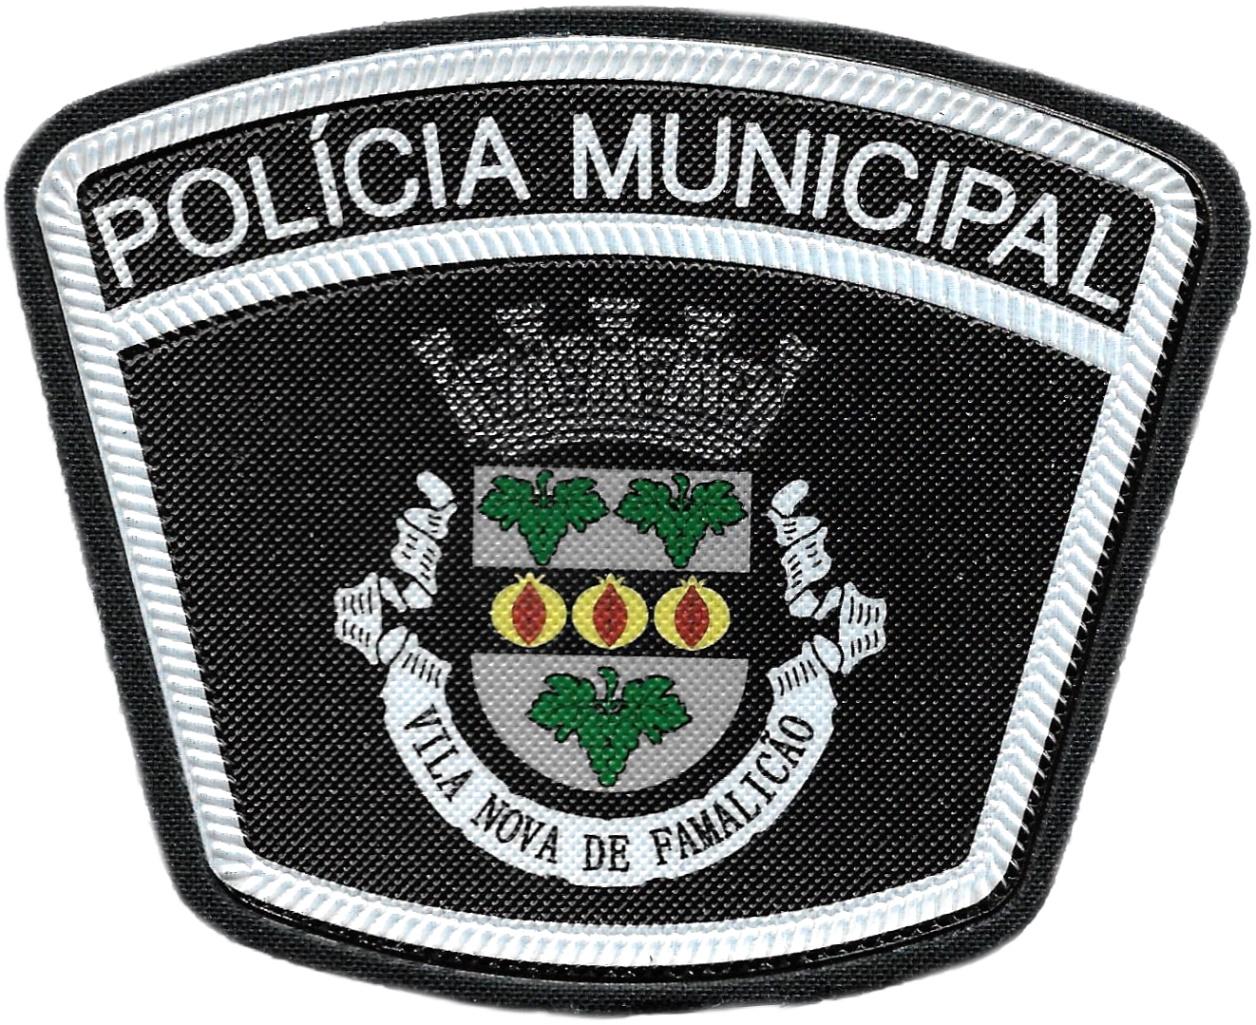 Policía Municipal Ciudad de Vila nova de Famalicao Portugal parche insignia emblema distintivo